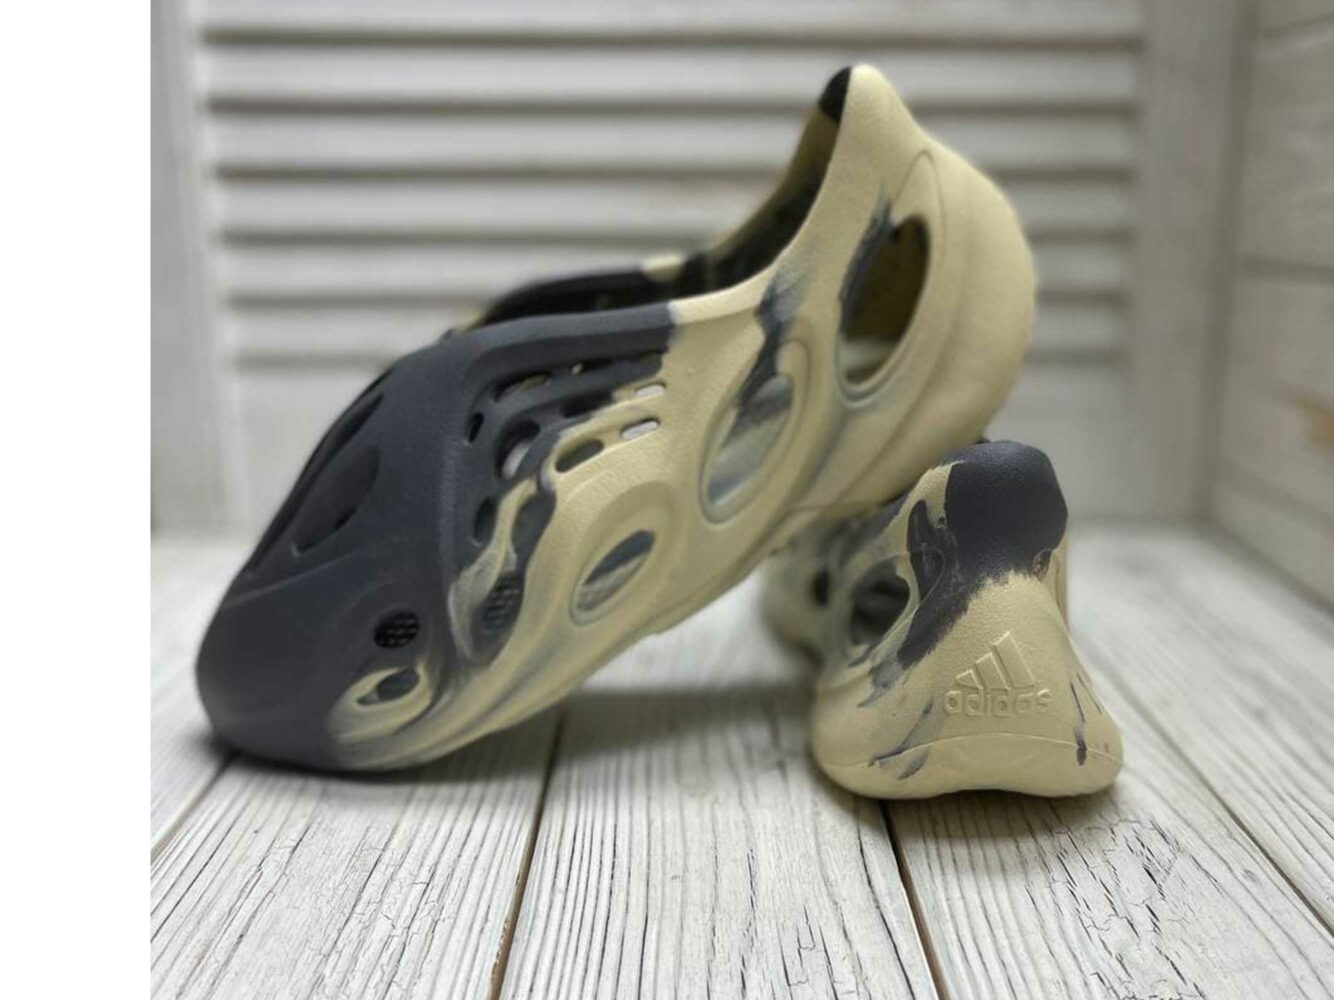 adidas yeezy foam runner mxt moon gray GV7904 купить